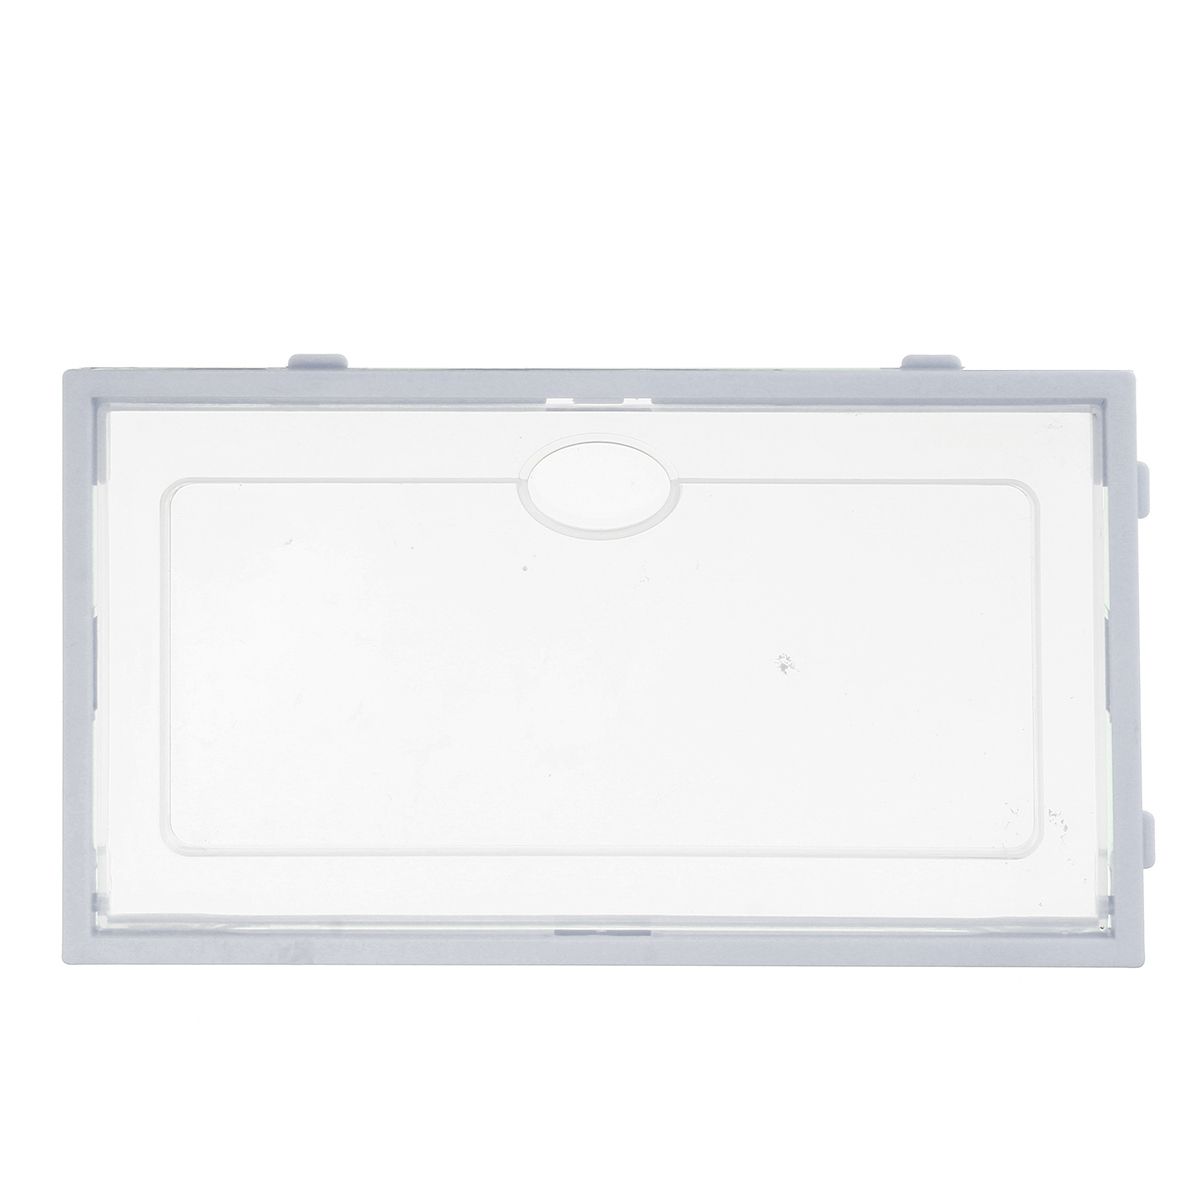 Filp-Cover-Foldable-Clear-Plastic-Shoe-Racks-Boxes-Storage-Organizer-Stackable-Tidy-Single-Box-1426210